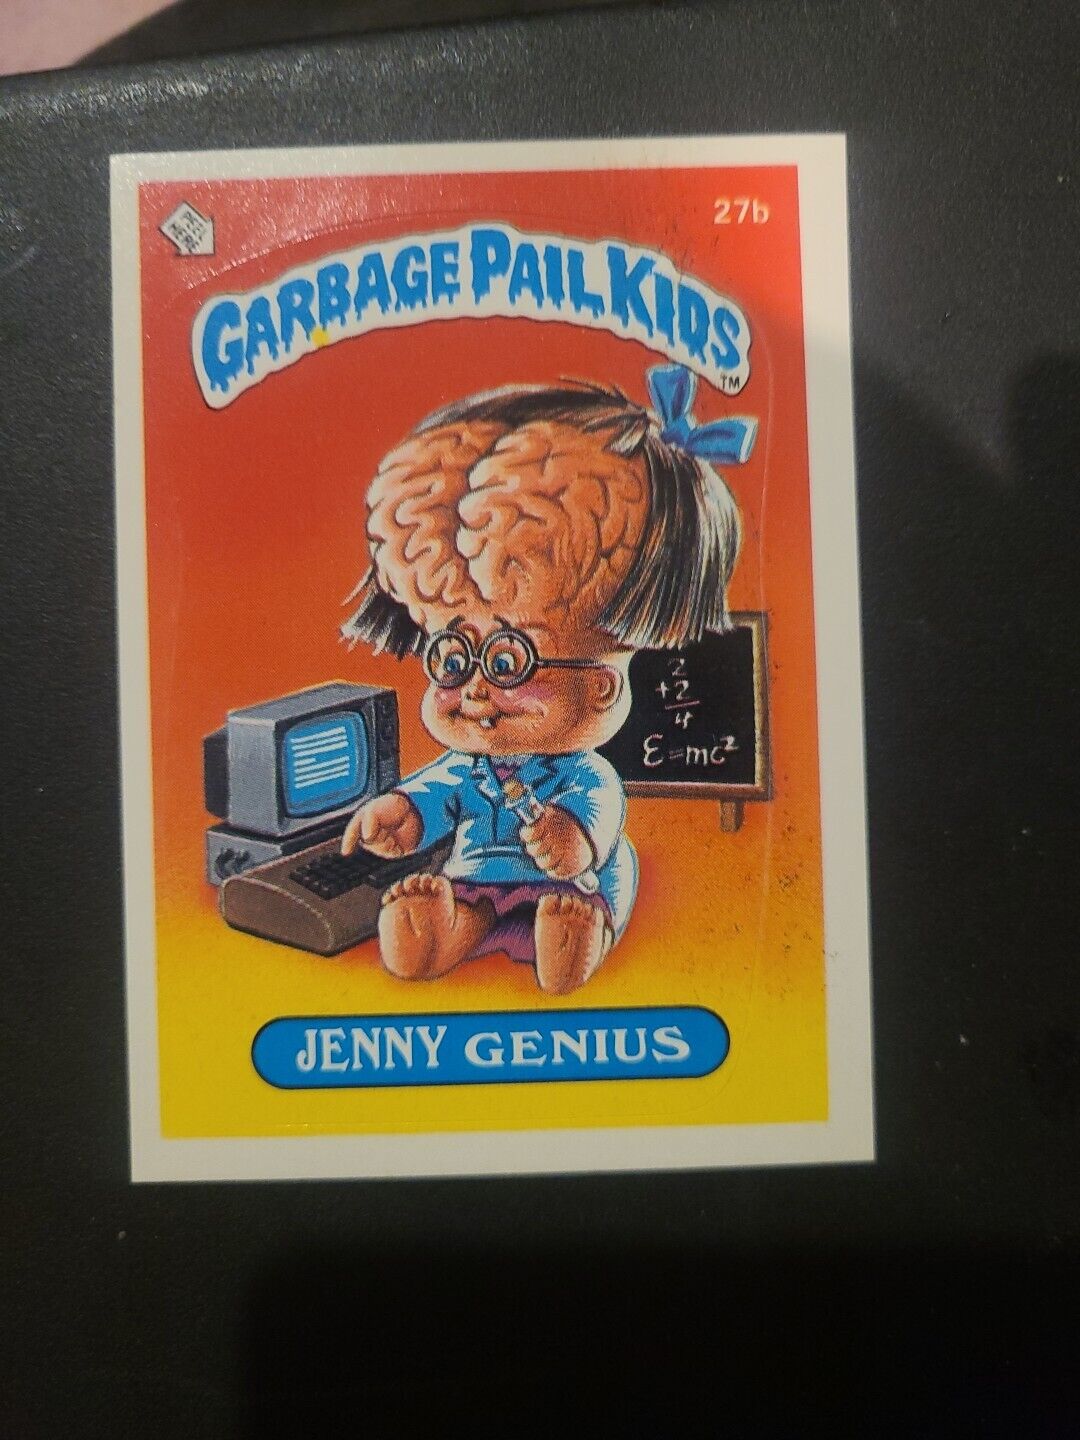 1985 Garbage Pail Kids Original Series 1 #27b Jenny Genius CARD Glossy